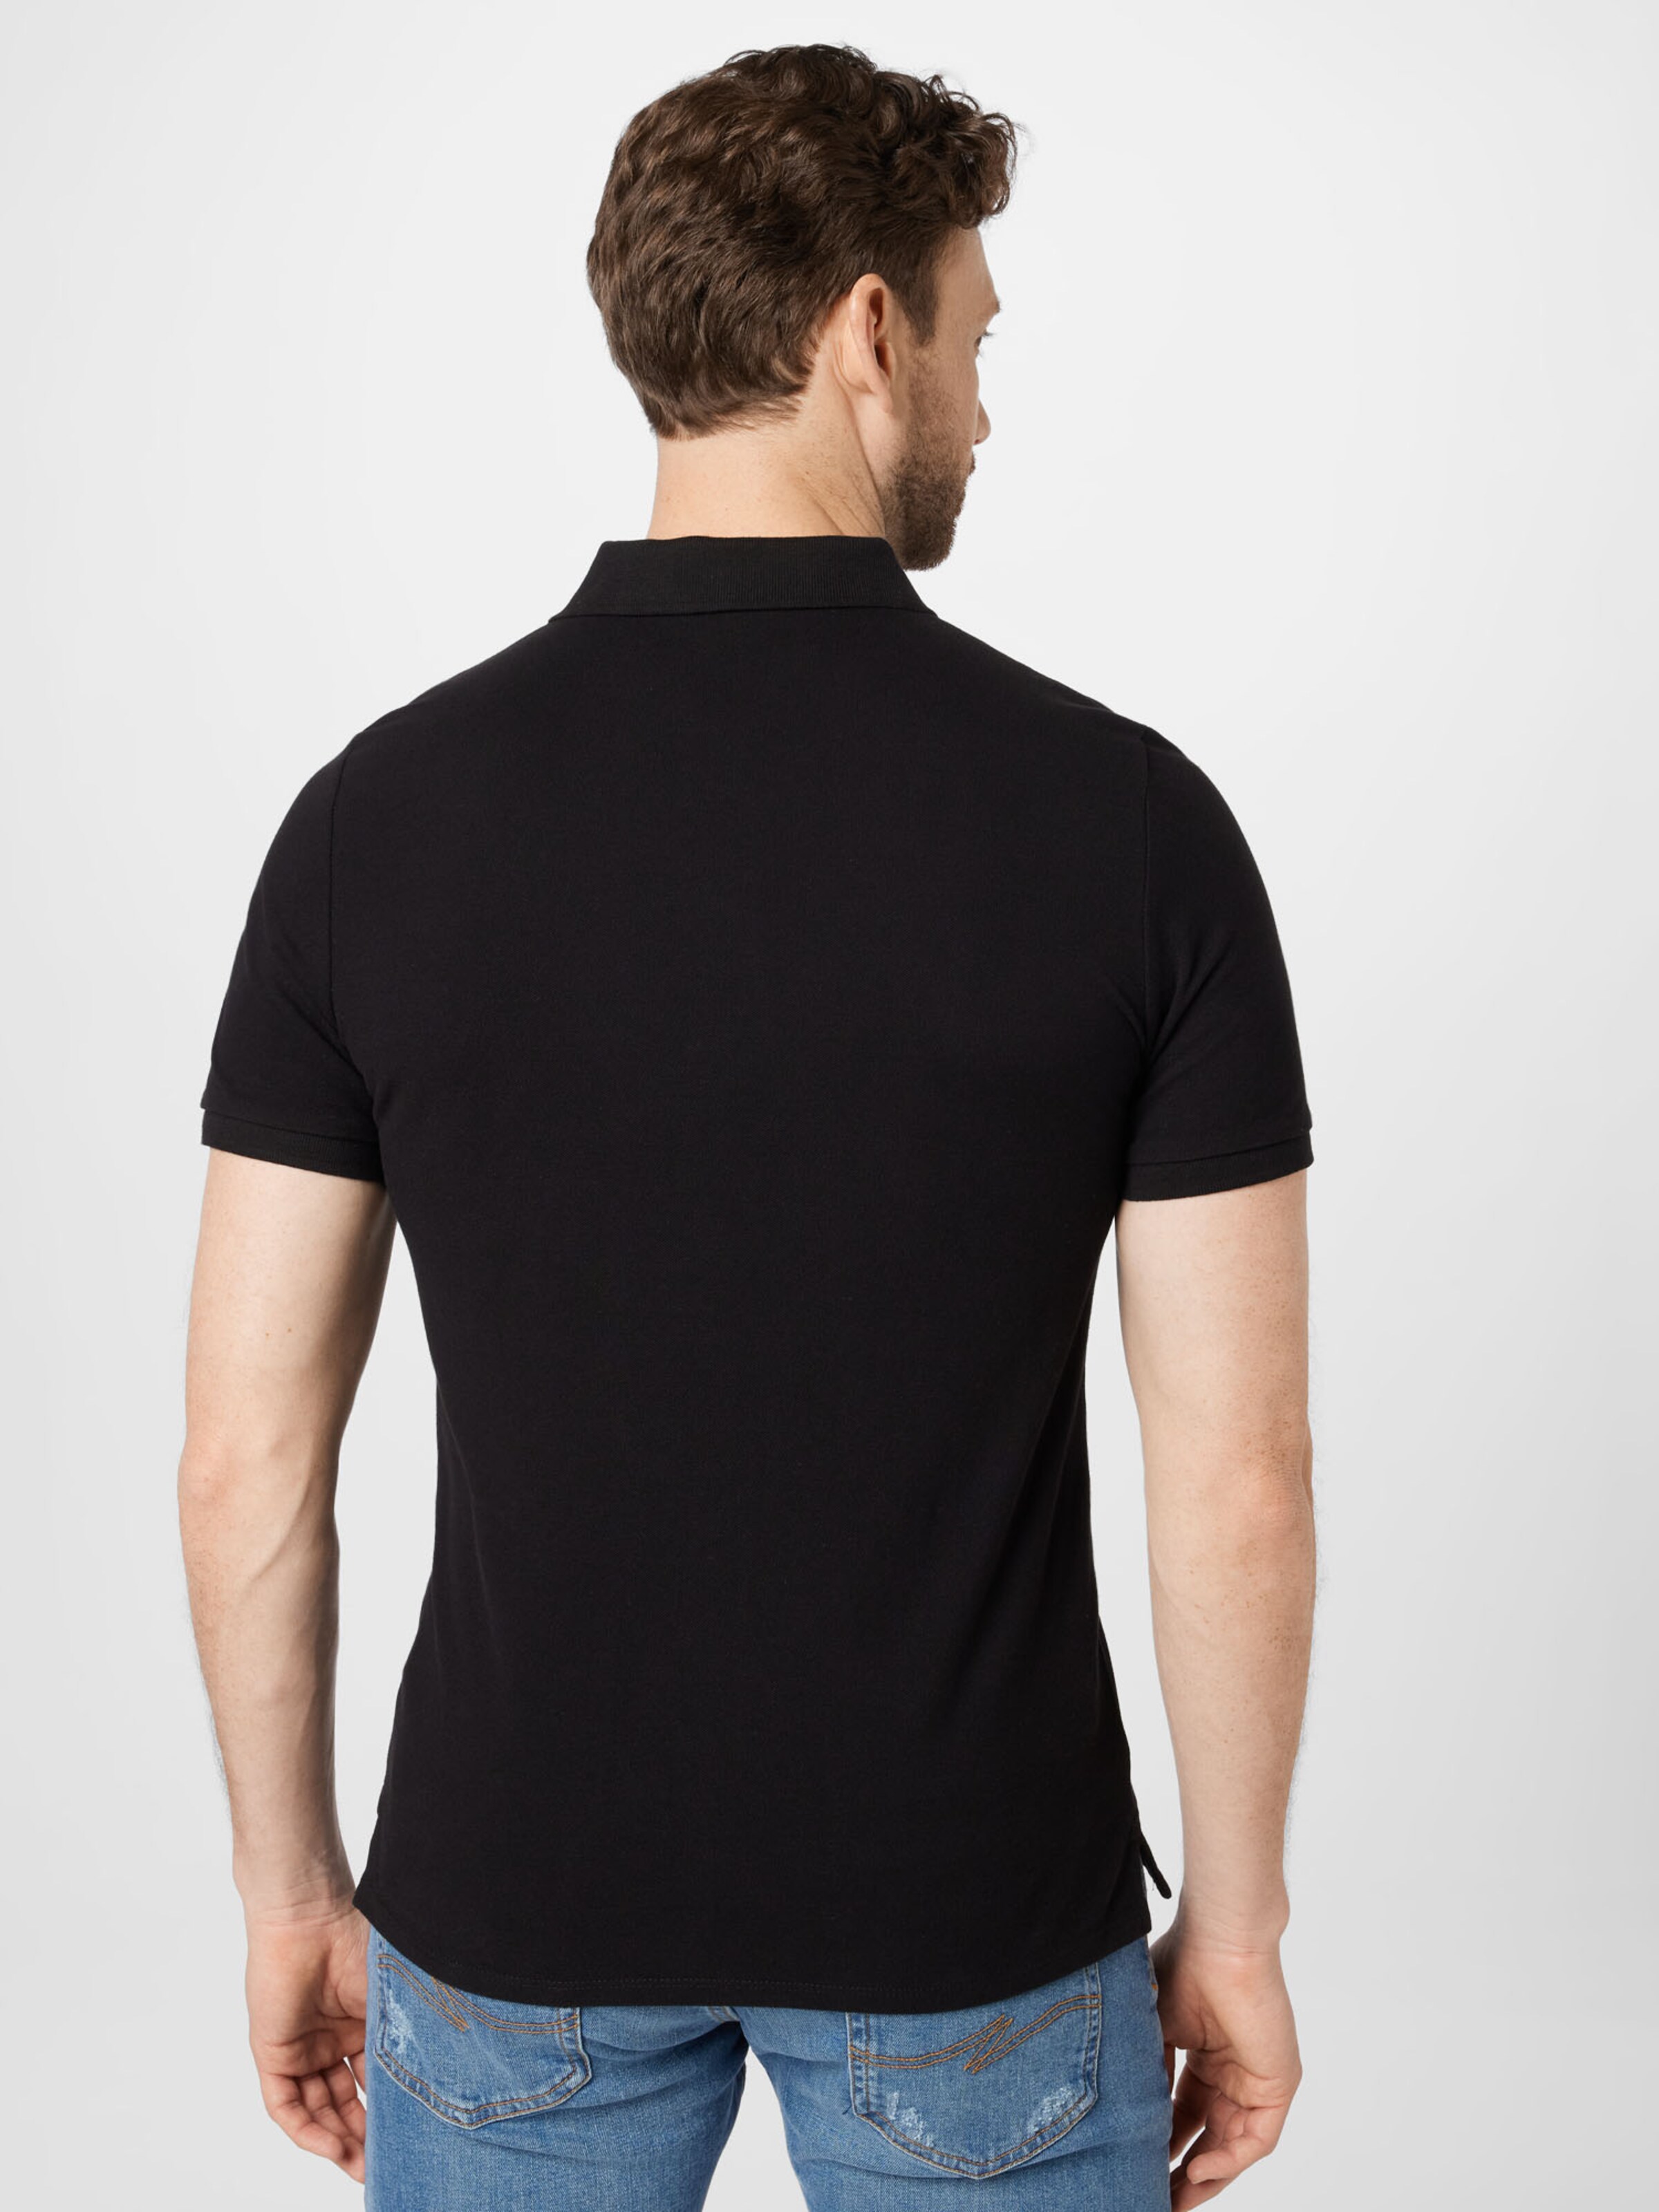 Männer Shirts QS by s.Oliver Poloshirt in Schwarz - VT15768